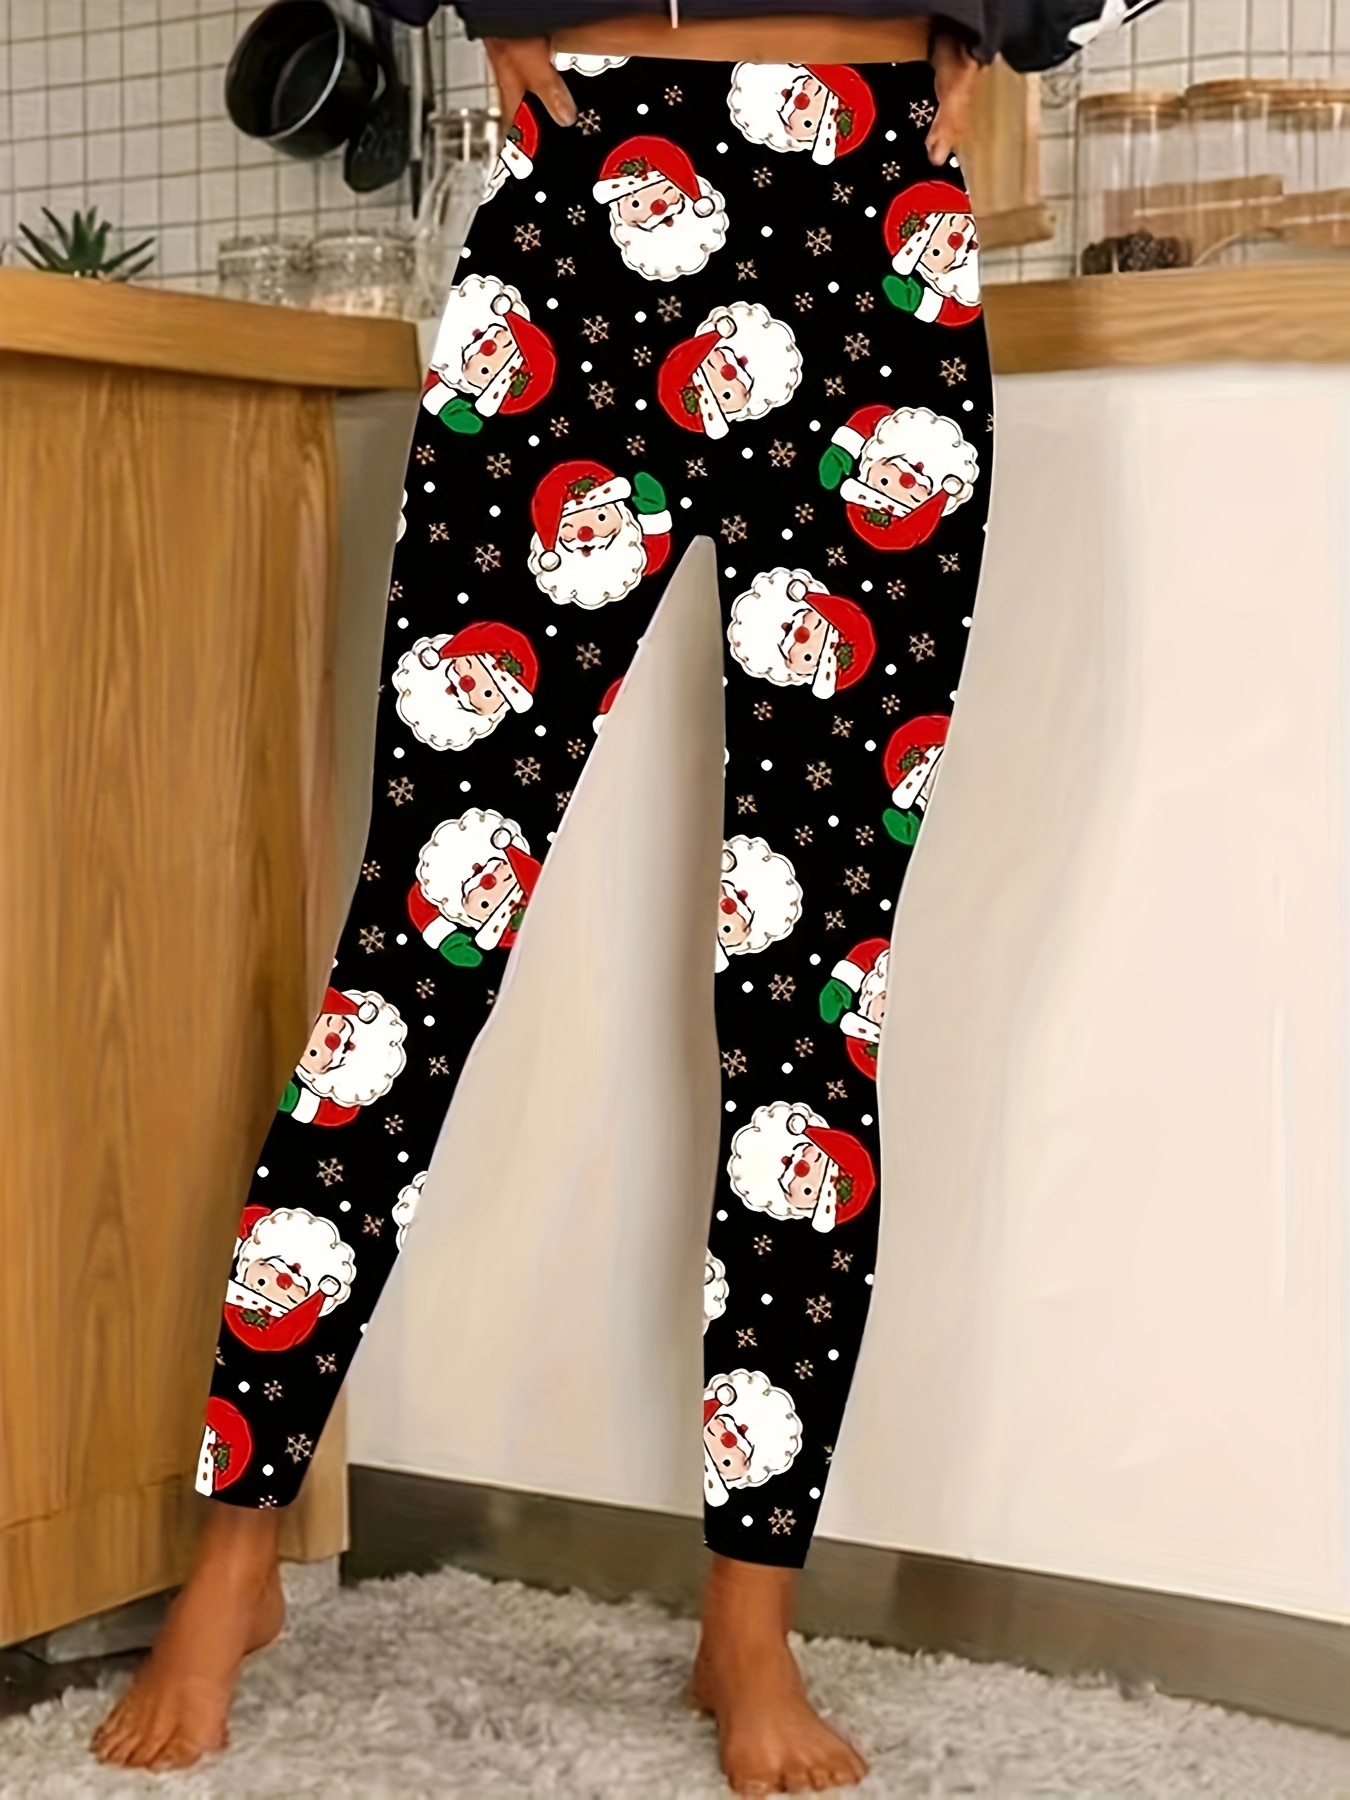 Santa's Outfit Yoga Leggings: Women's Christmas Outfits